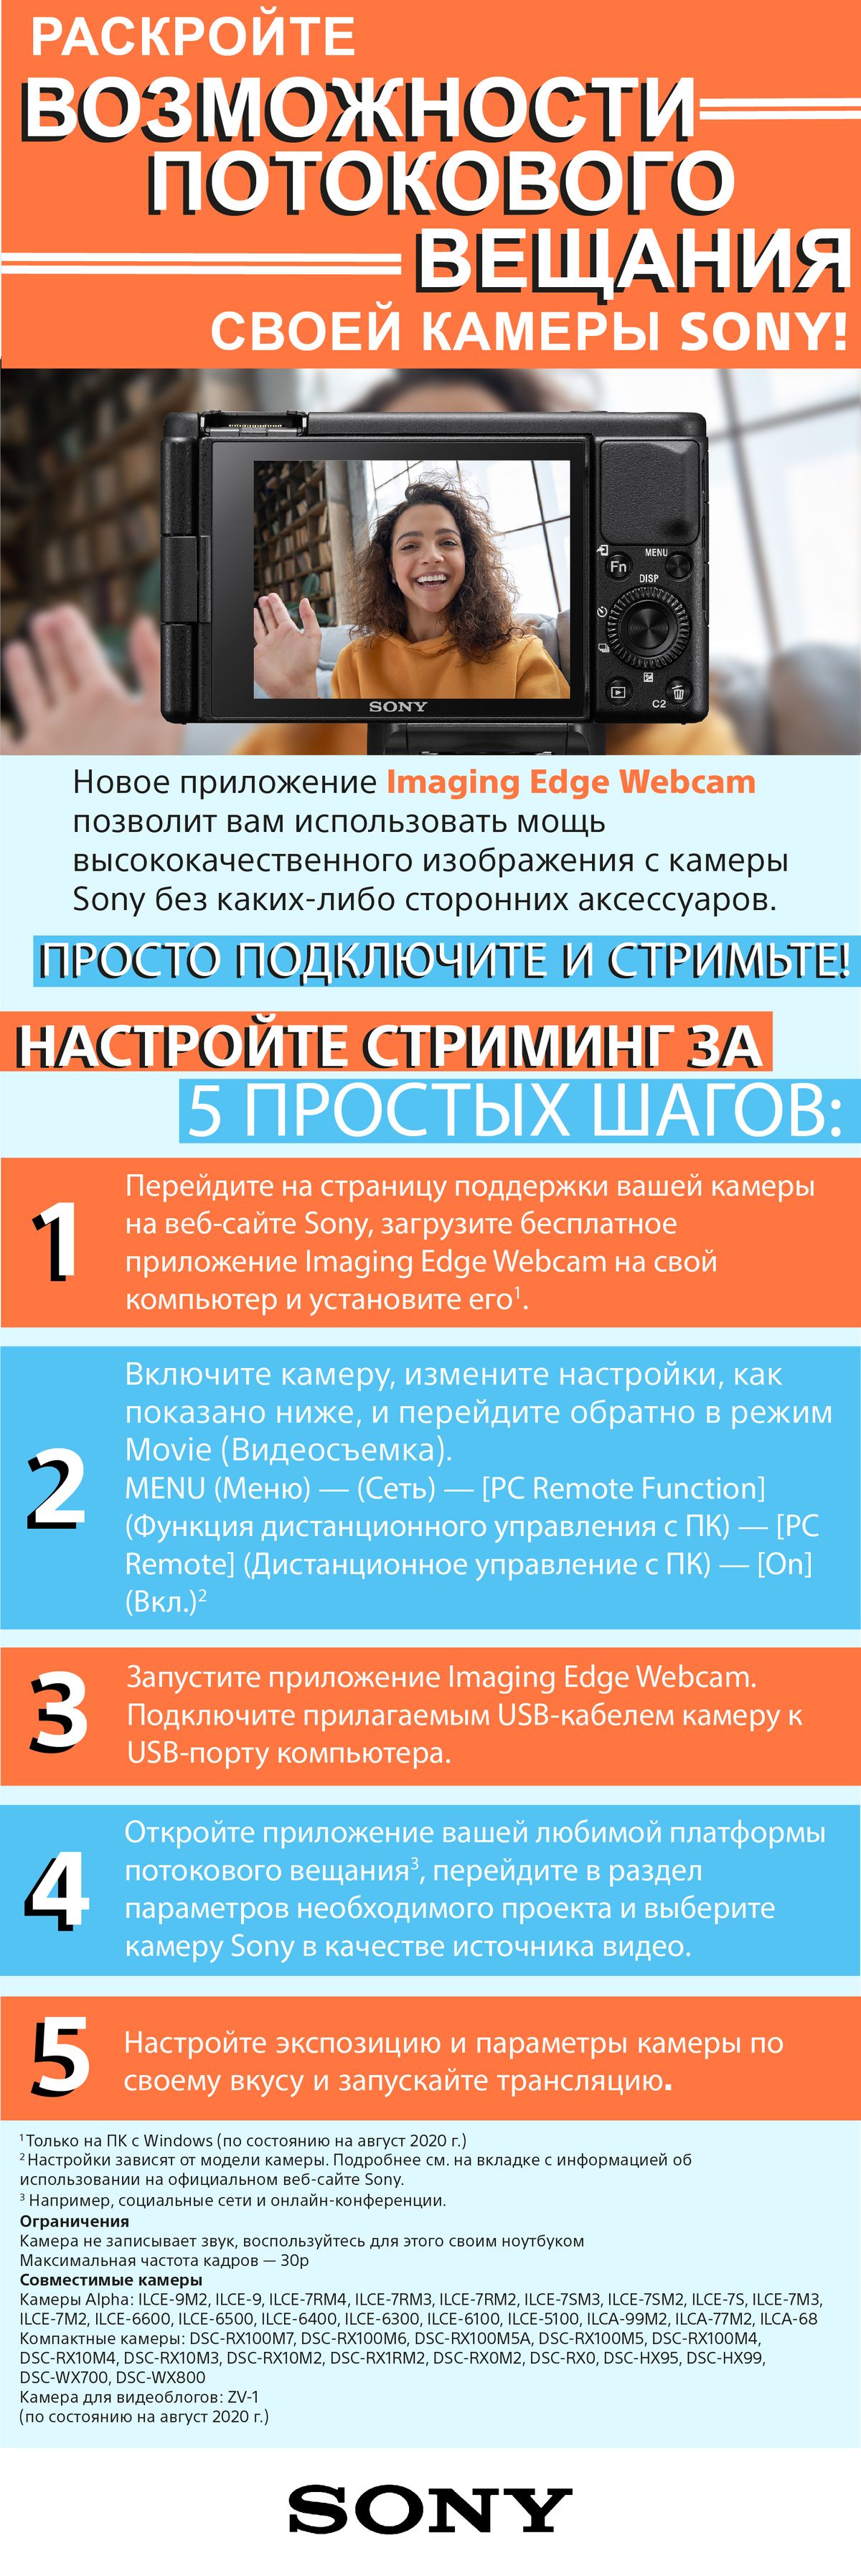 Imaging Edge Webcam Infographic_Russian.jpg